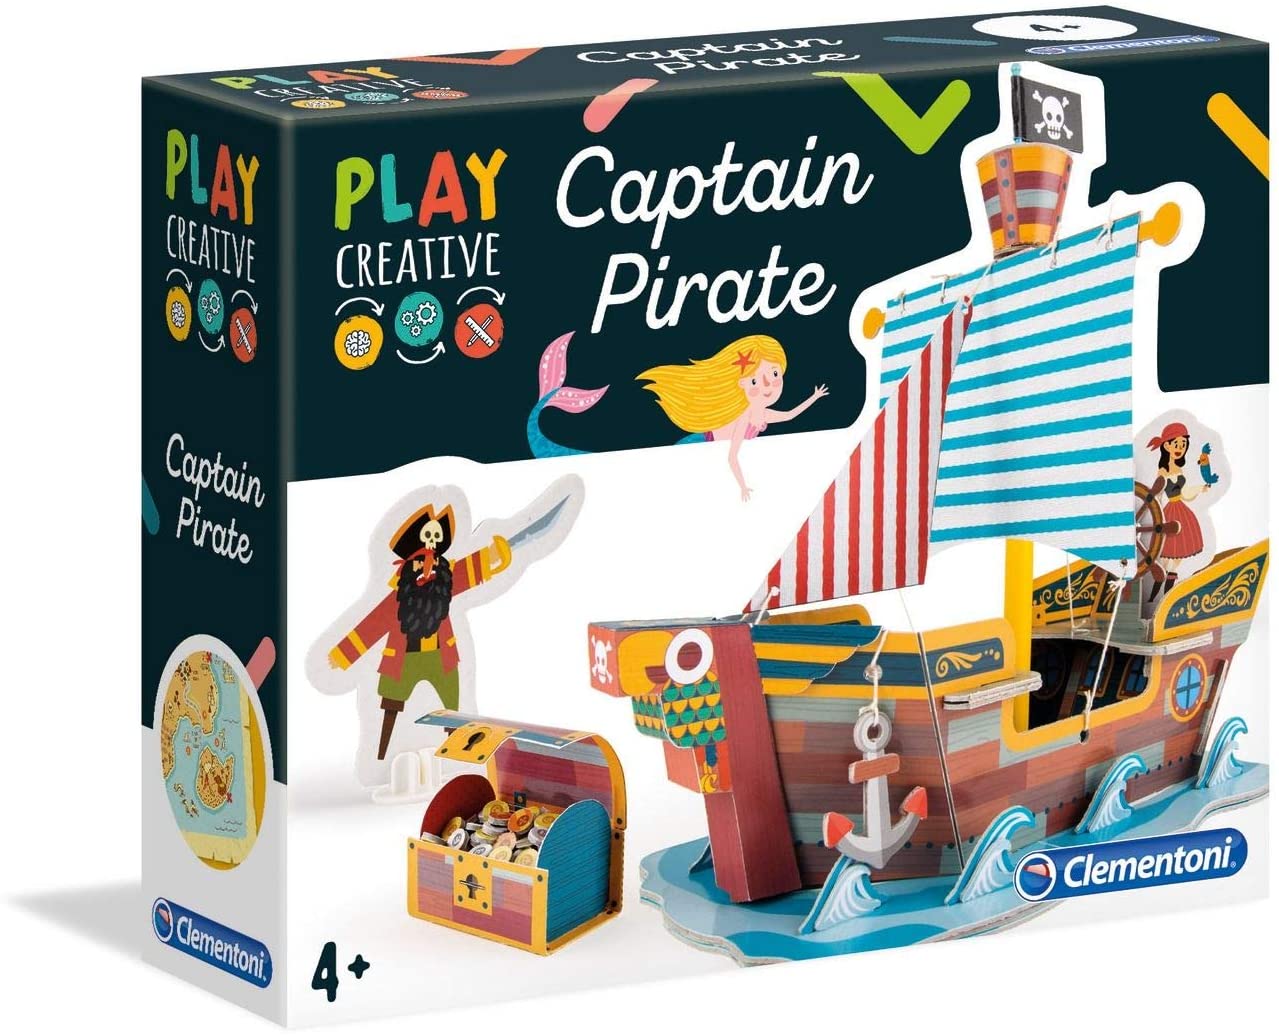 Clementoni 18553 Play Creative Captain Pirate